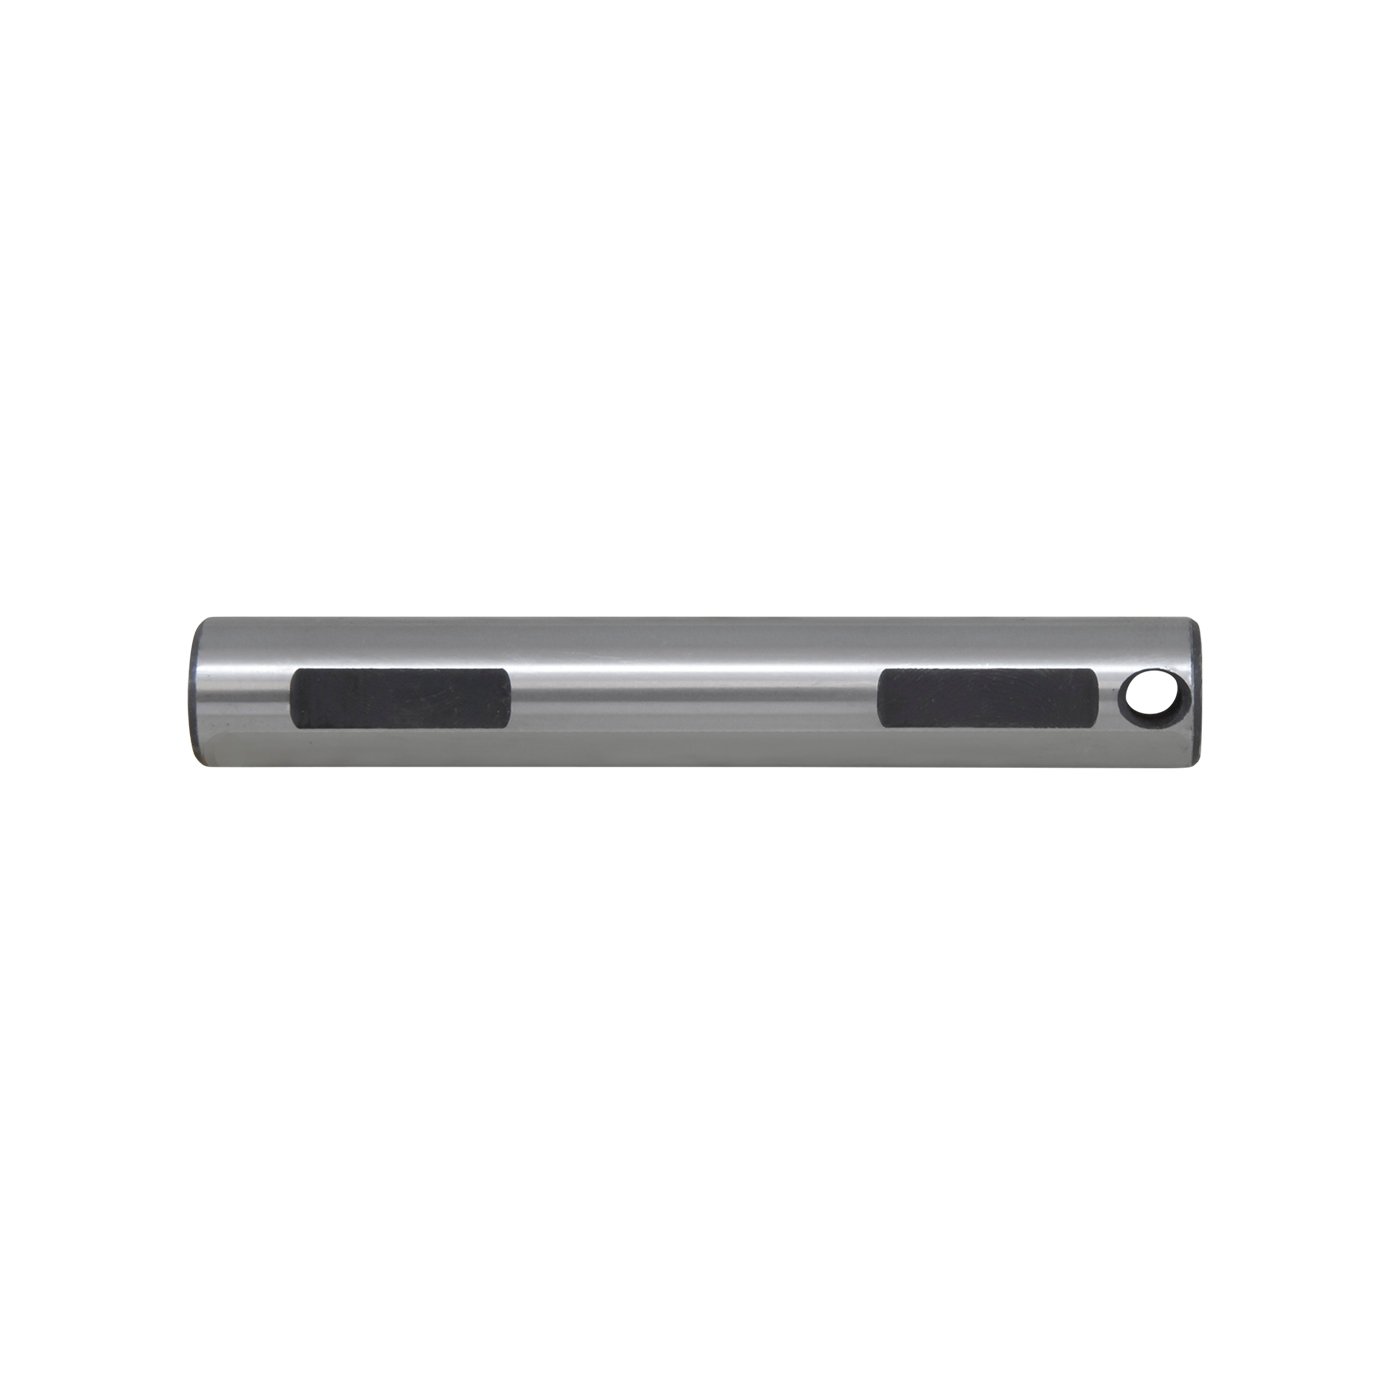 Chrome Moly Cross Pin Shaft For Mini-Spool For